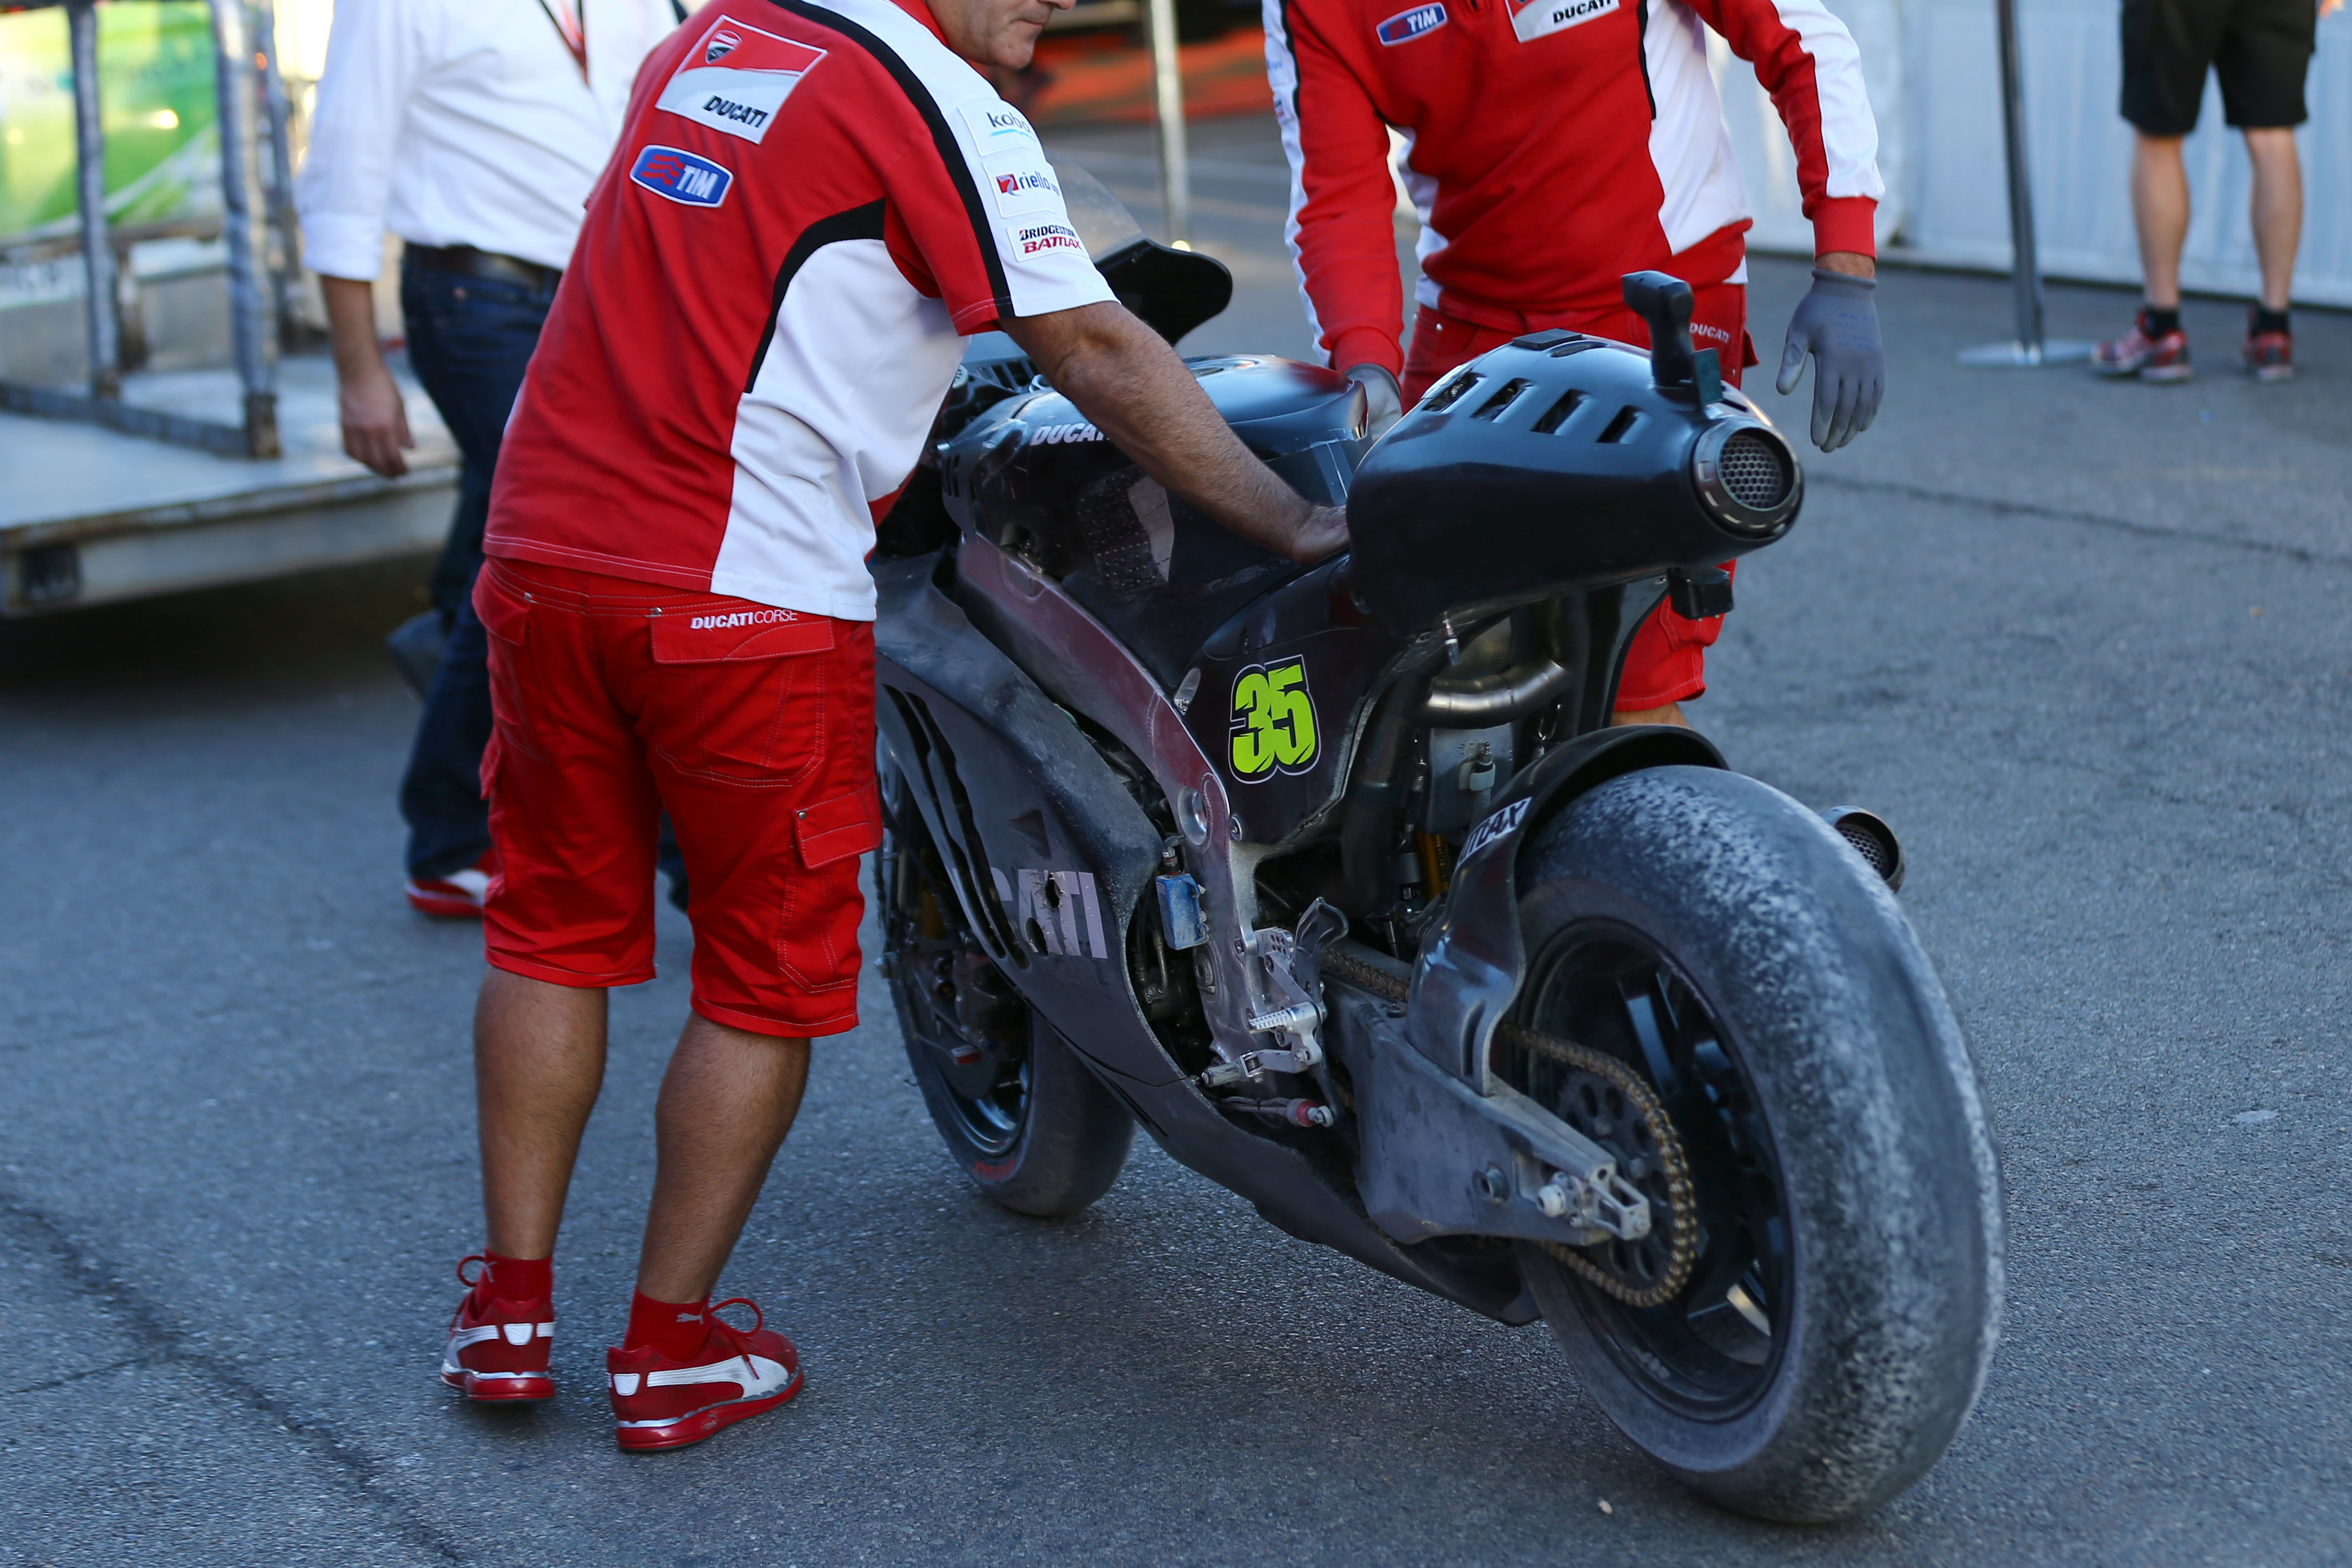 First Ducati crash for Crutchlow